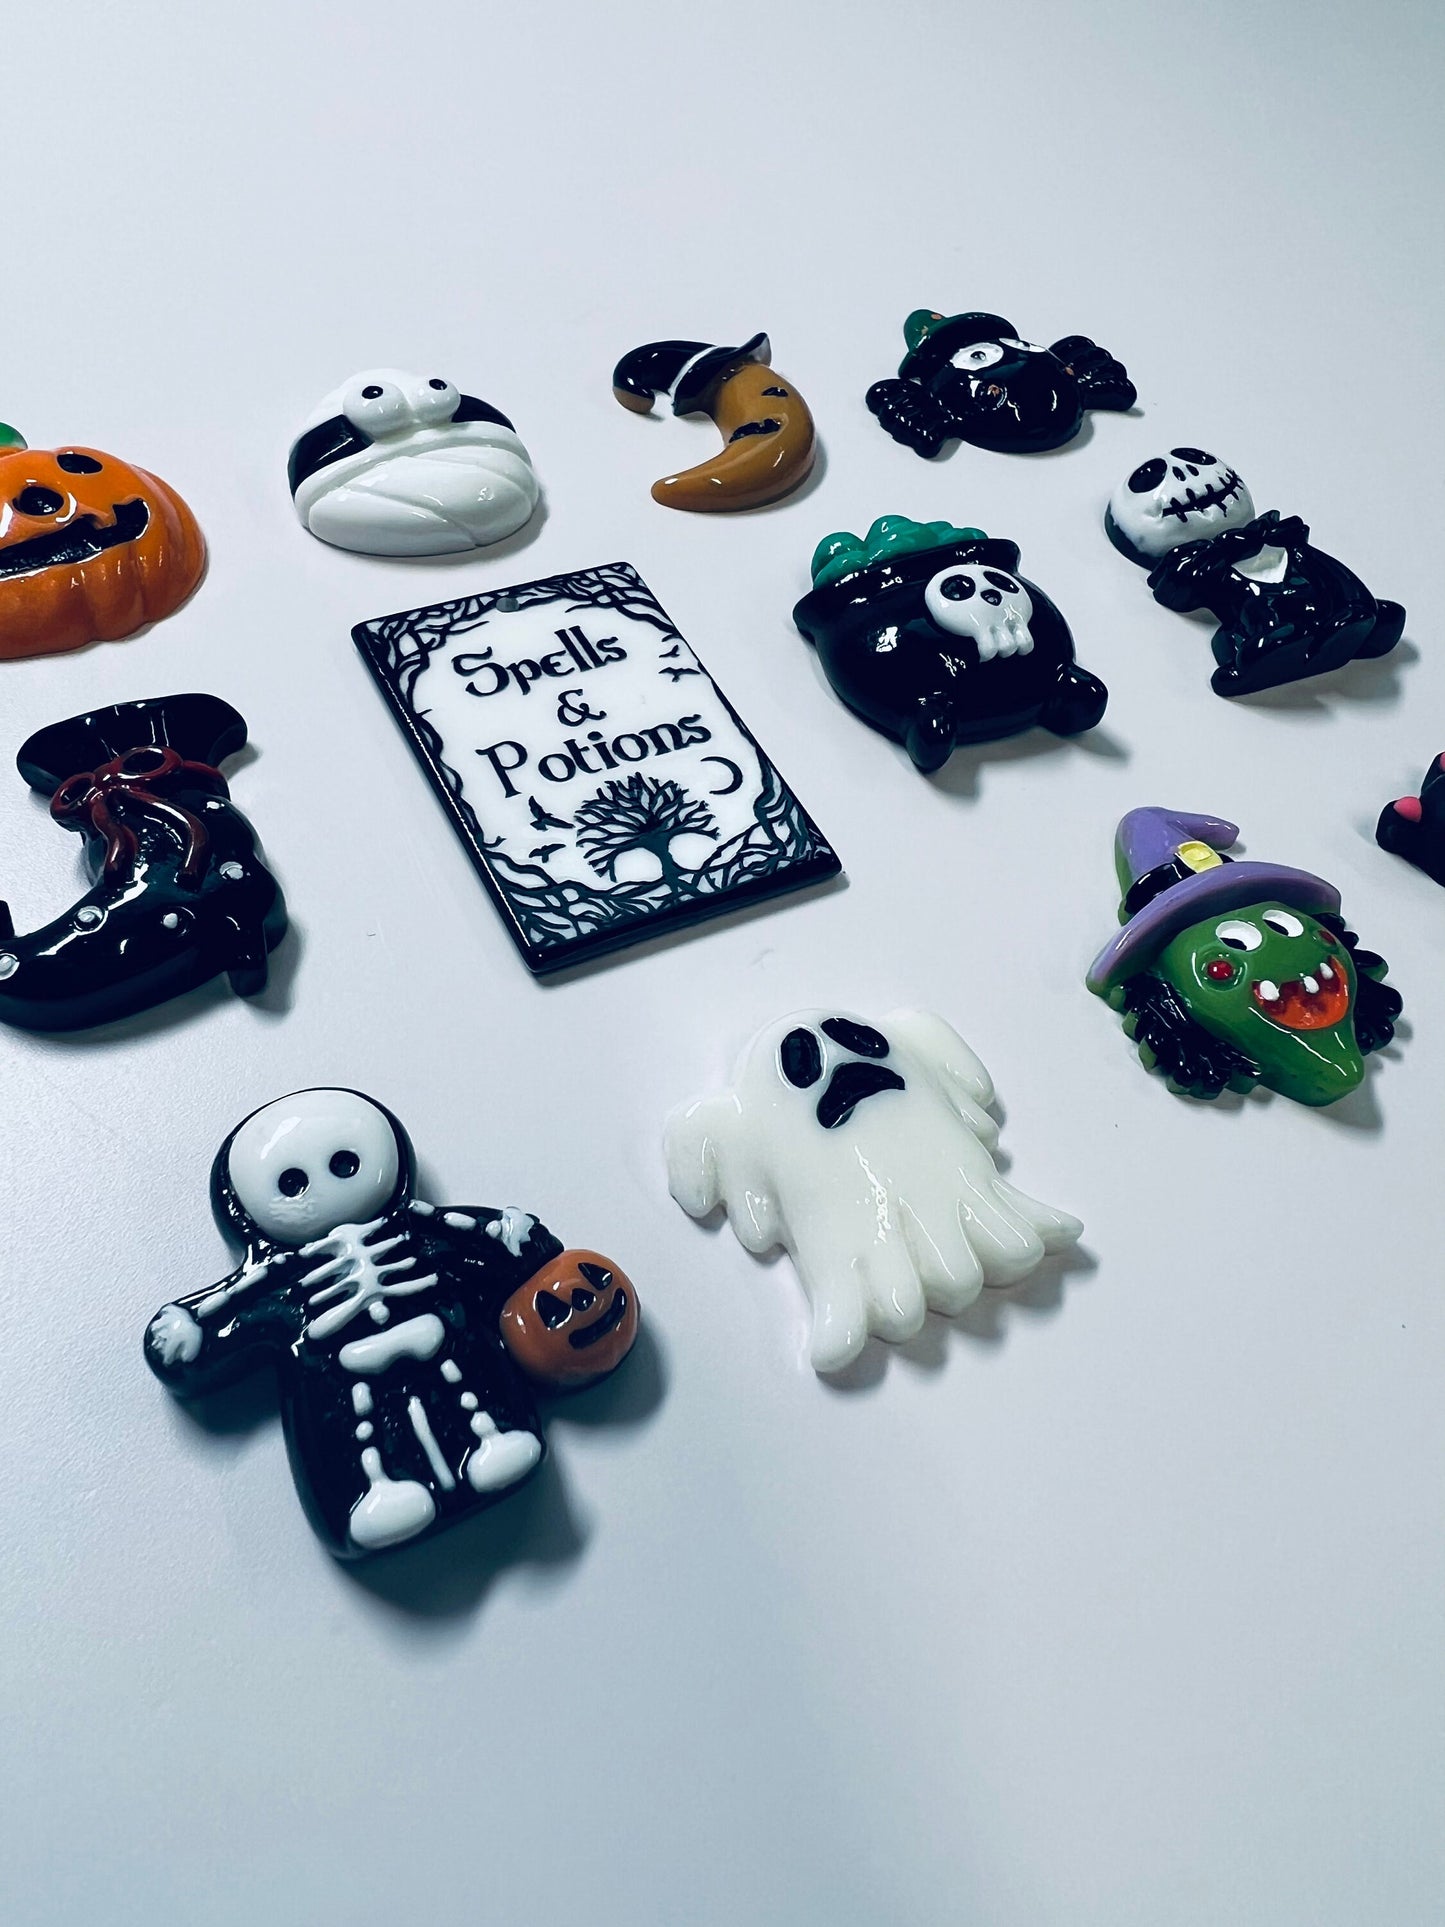 Baratijas de Halloween-Mini objetos de Halloween